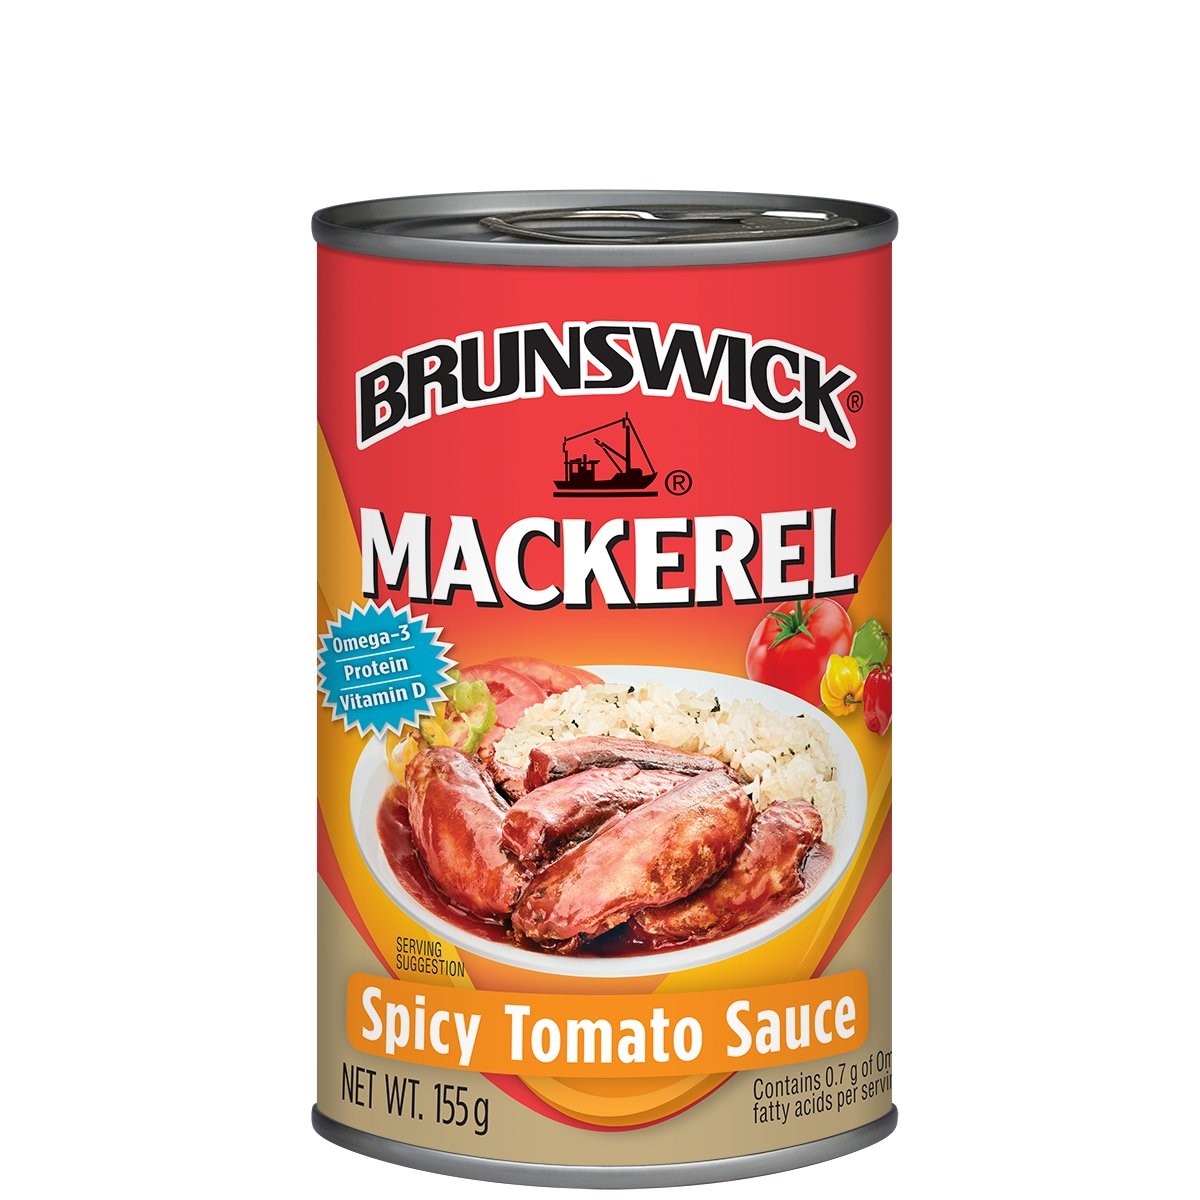 BRUNSWICK MACKEREL SPICY TOMATO 155g